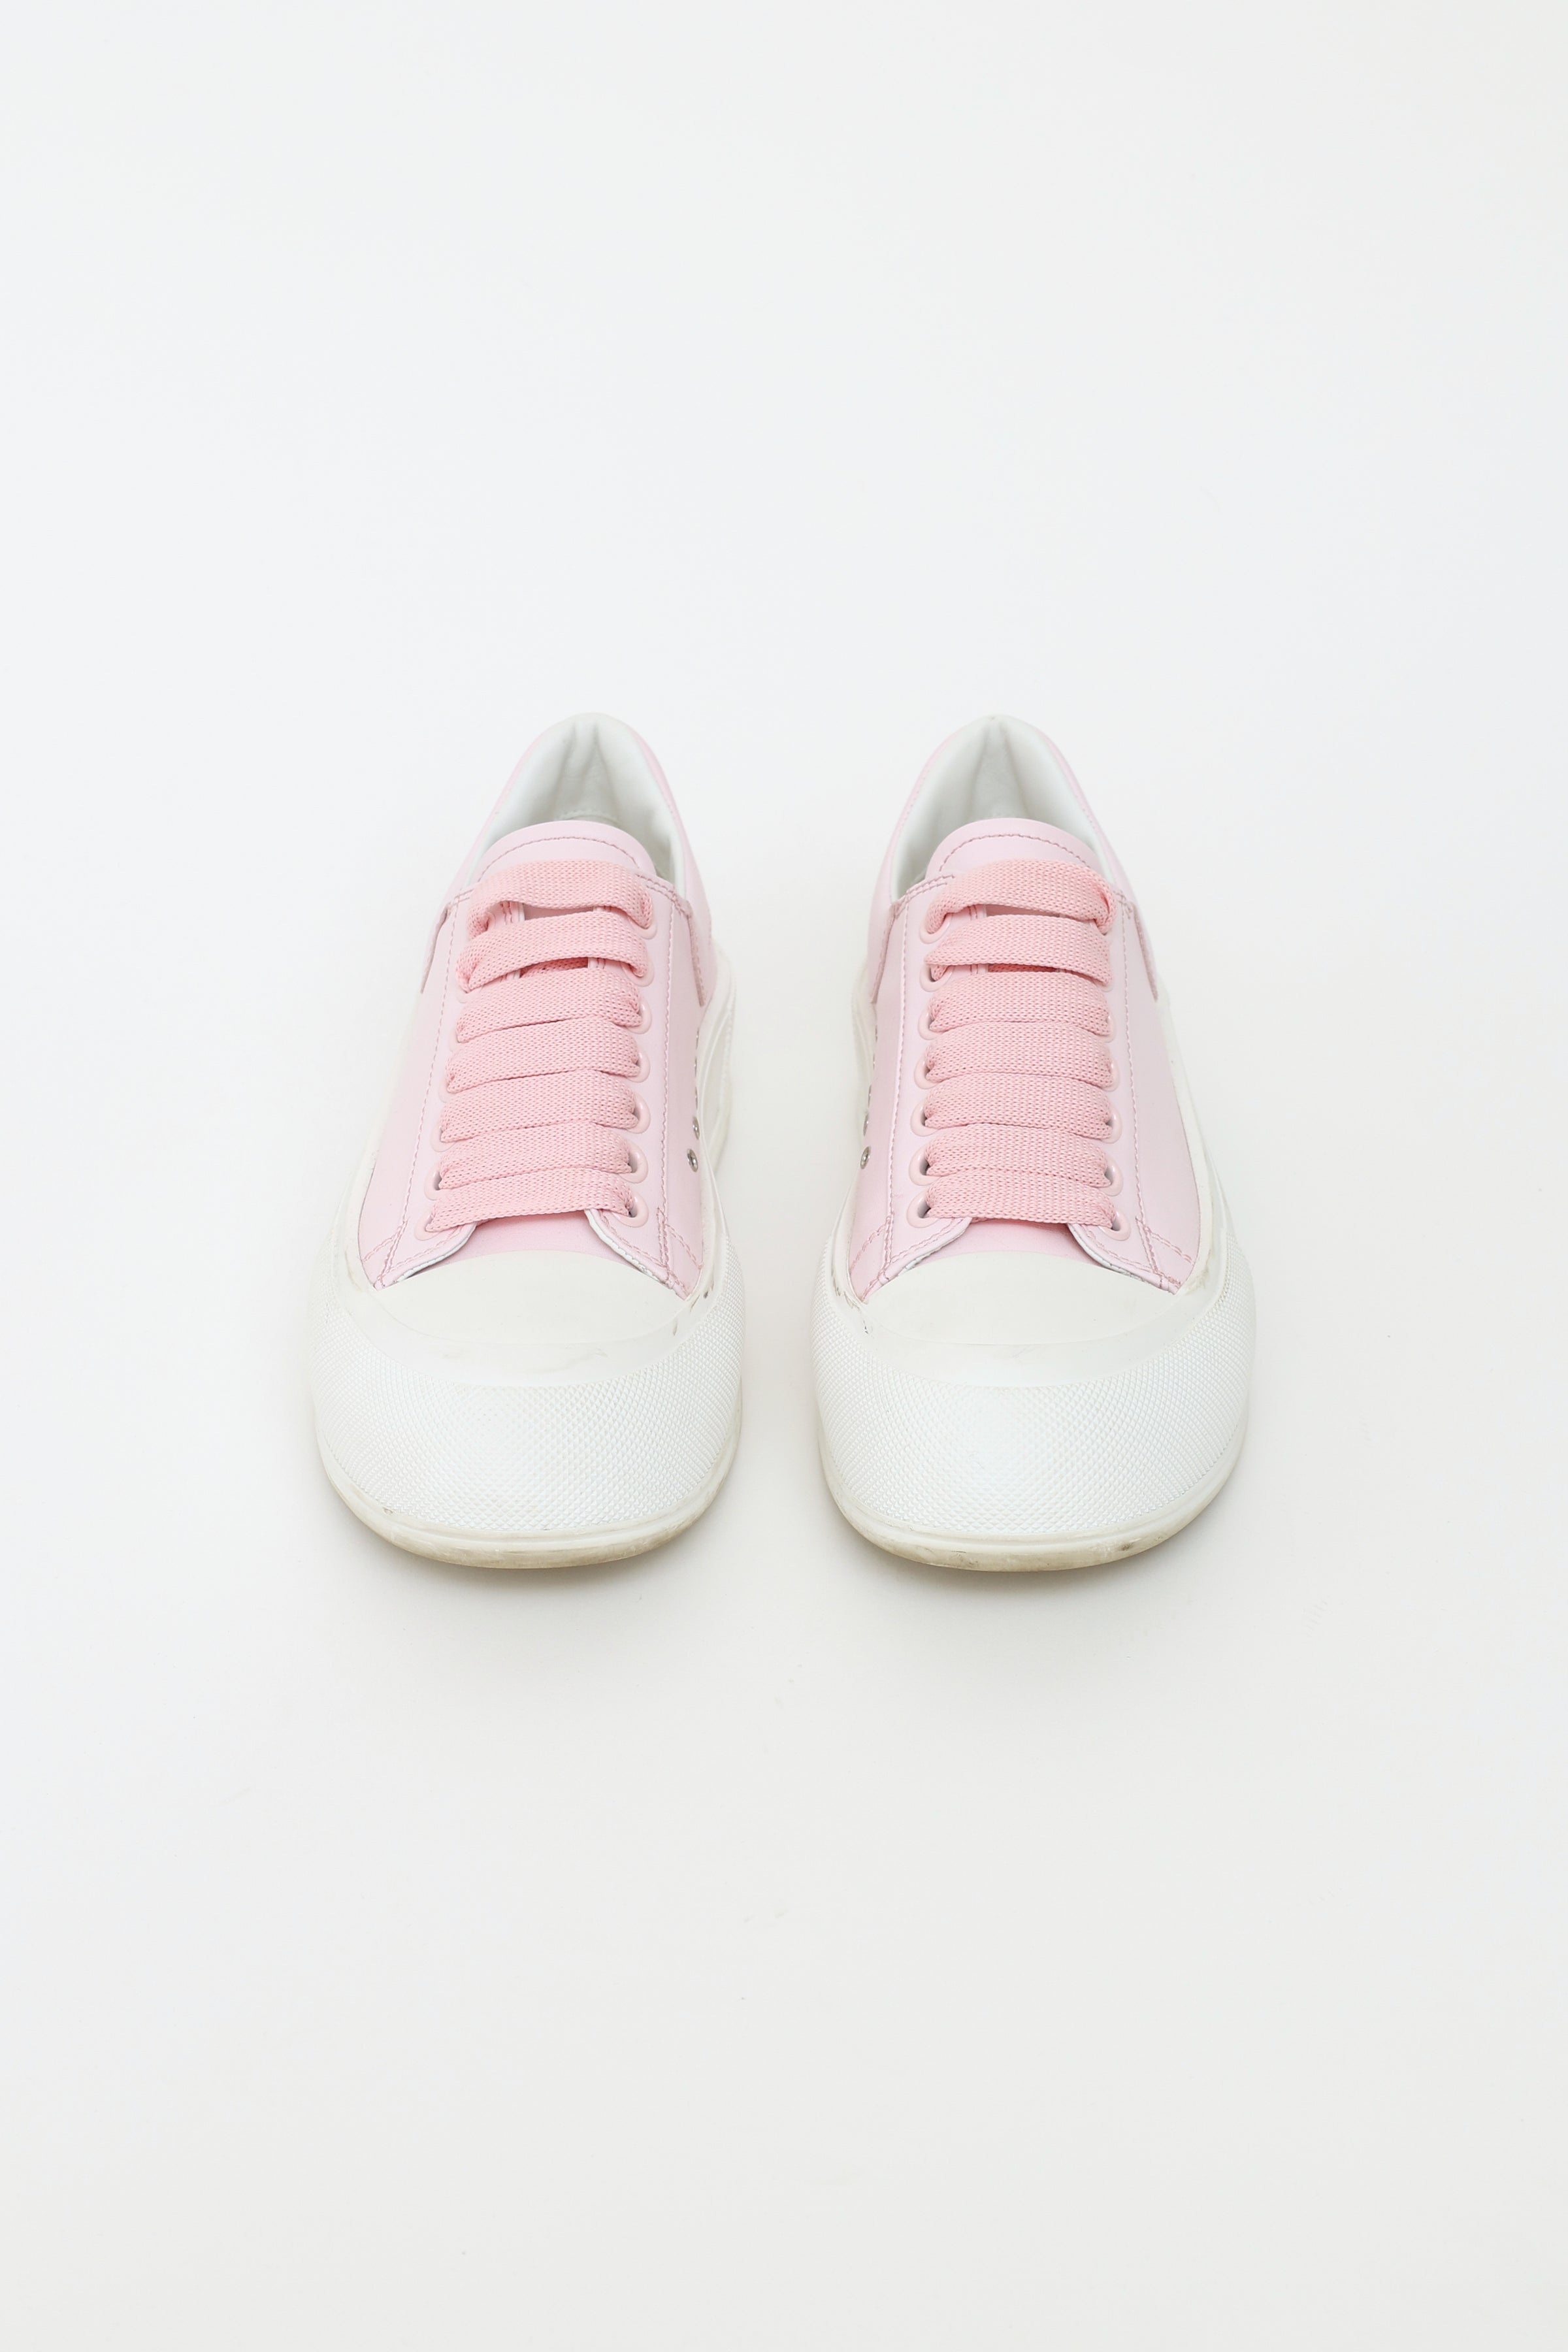 Alexander McQueen Oversized Women's Sneakers Size 41.5 EU / 11.5 US White  Pink | eBay